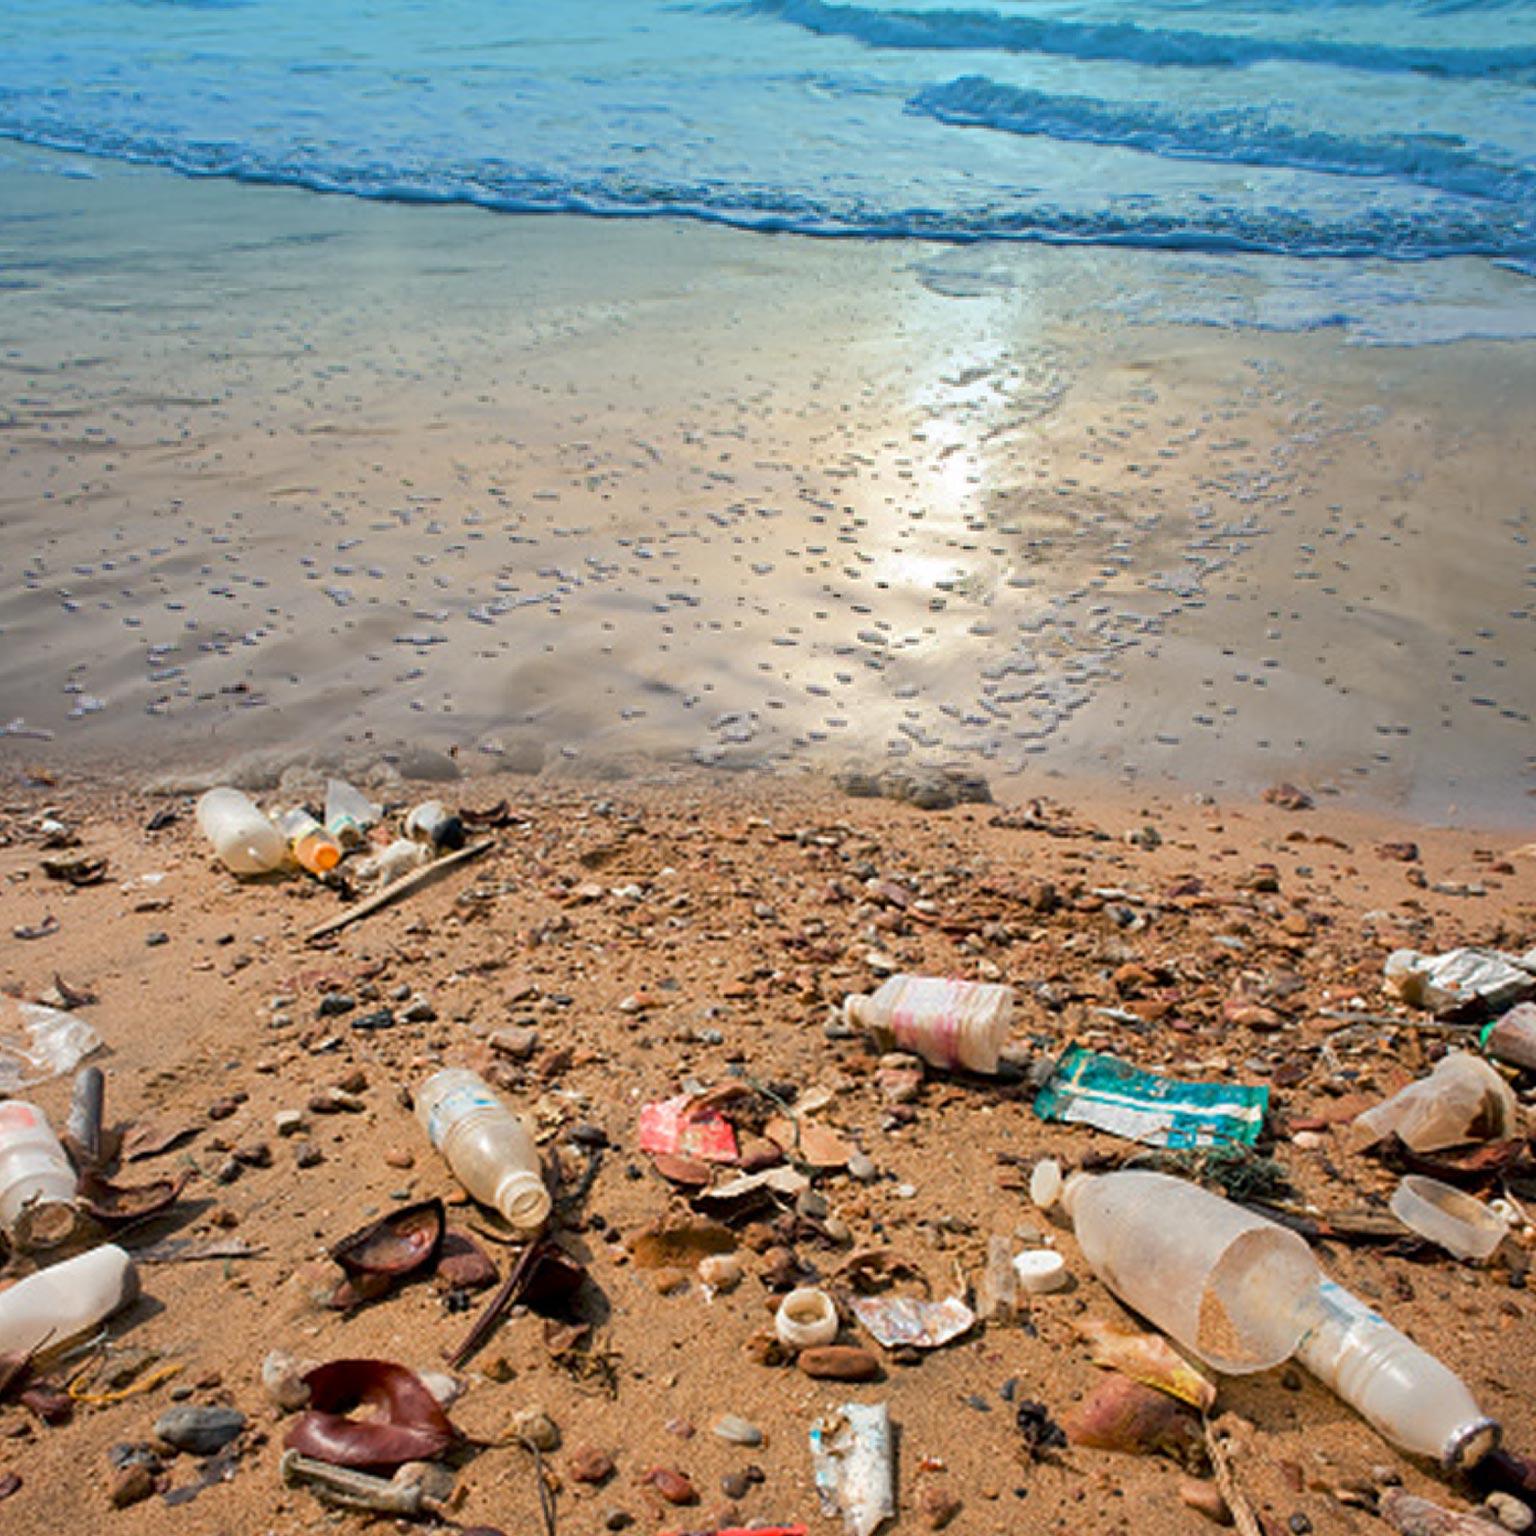 IandP_Saving-the-ocean-from-plastic-waste_1536x1536_Original